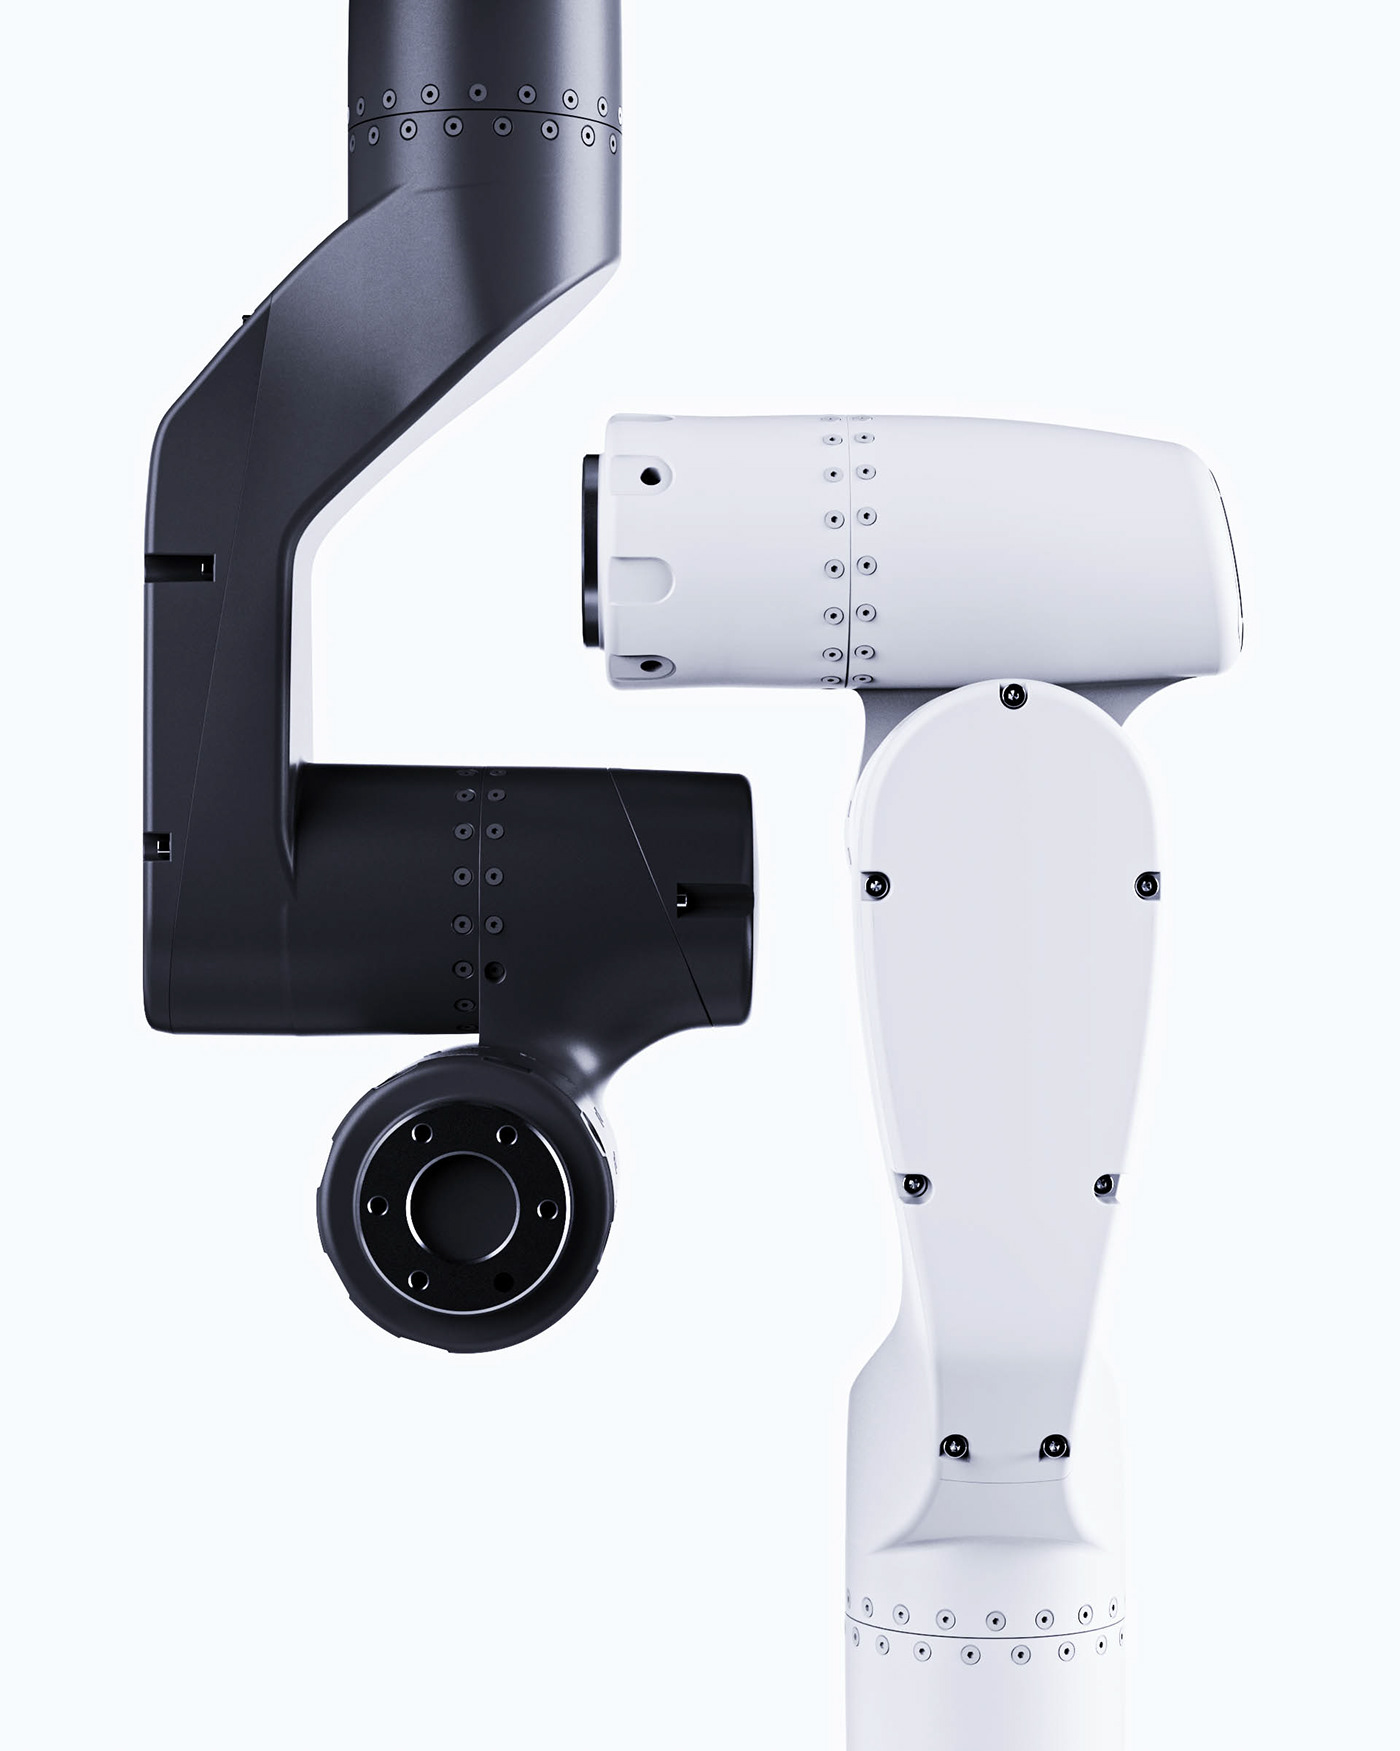 industrial design  robotics robots ROBOTIC ARM product design  industrial automation robot 3D Rendering visualization